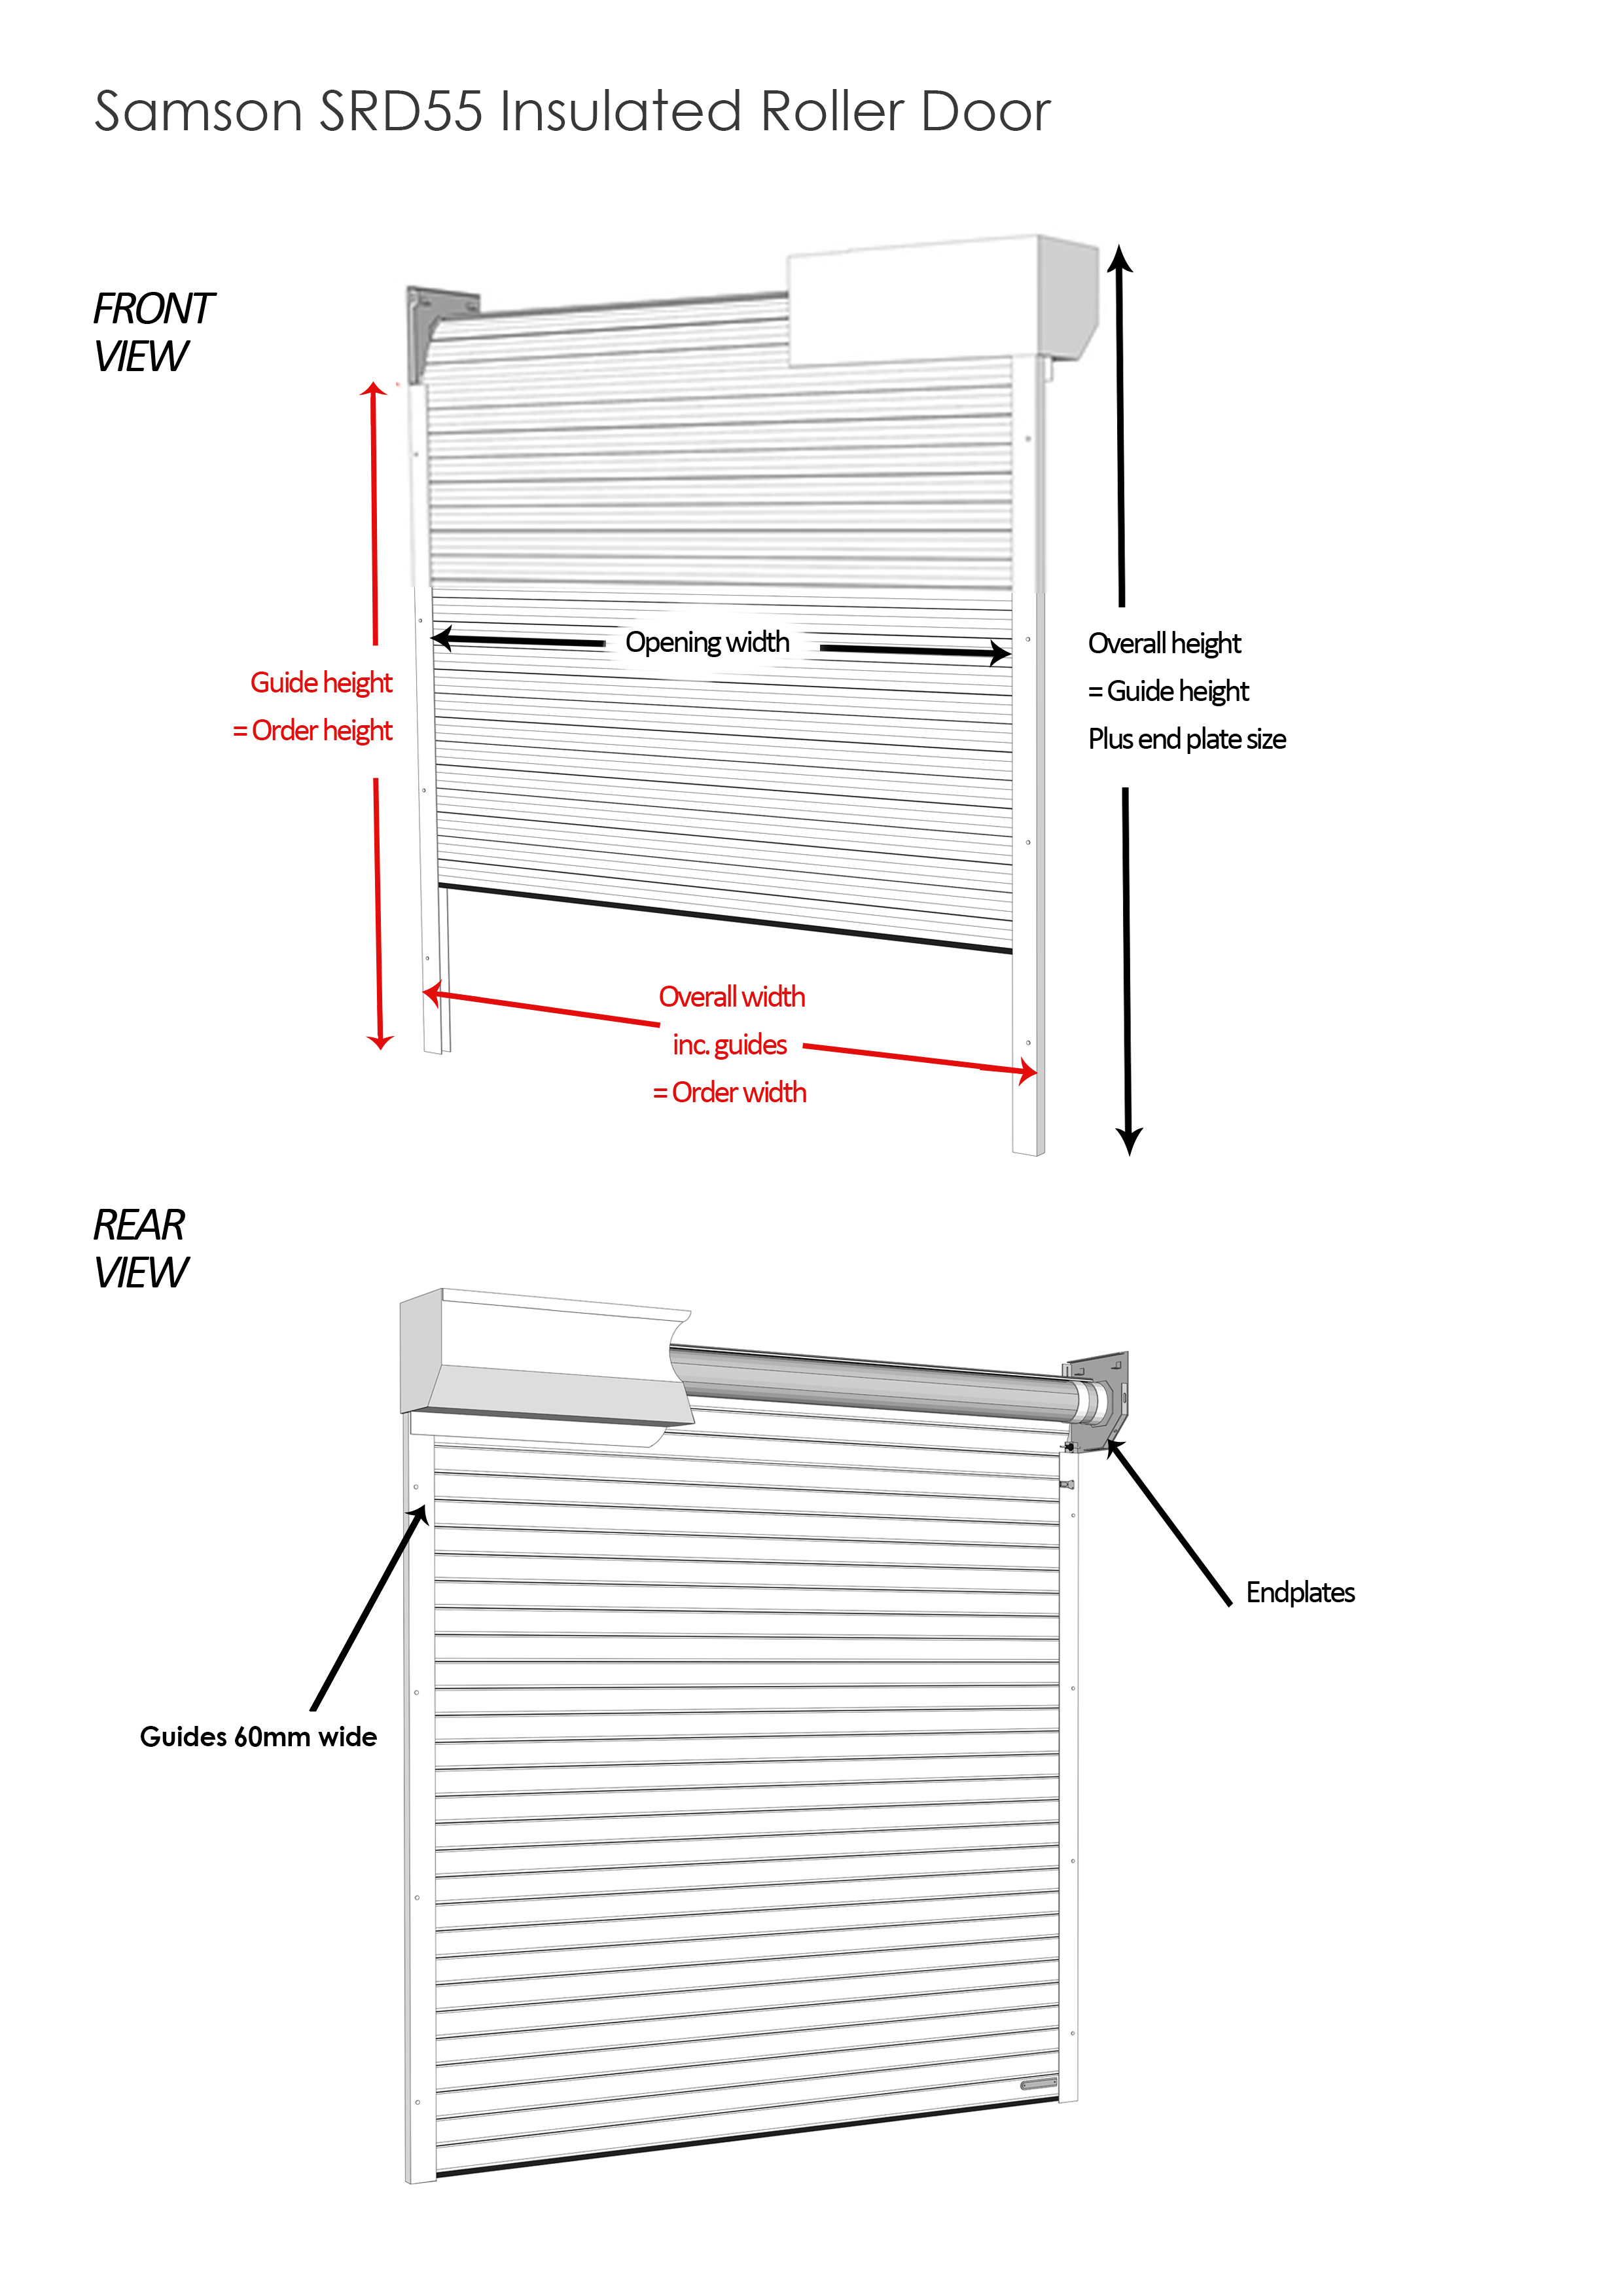 Measuring guide for Samson SRD55 insulated electric roller door